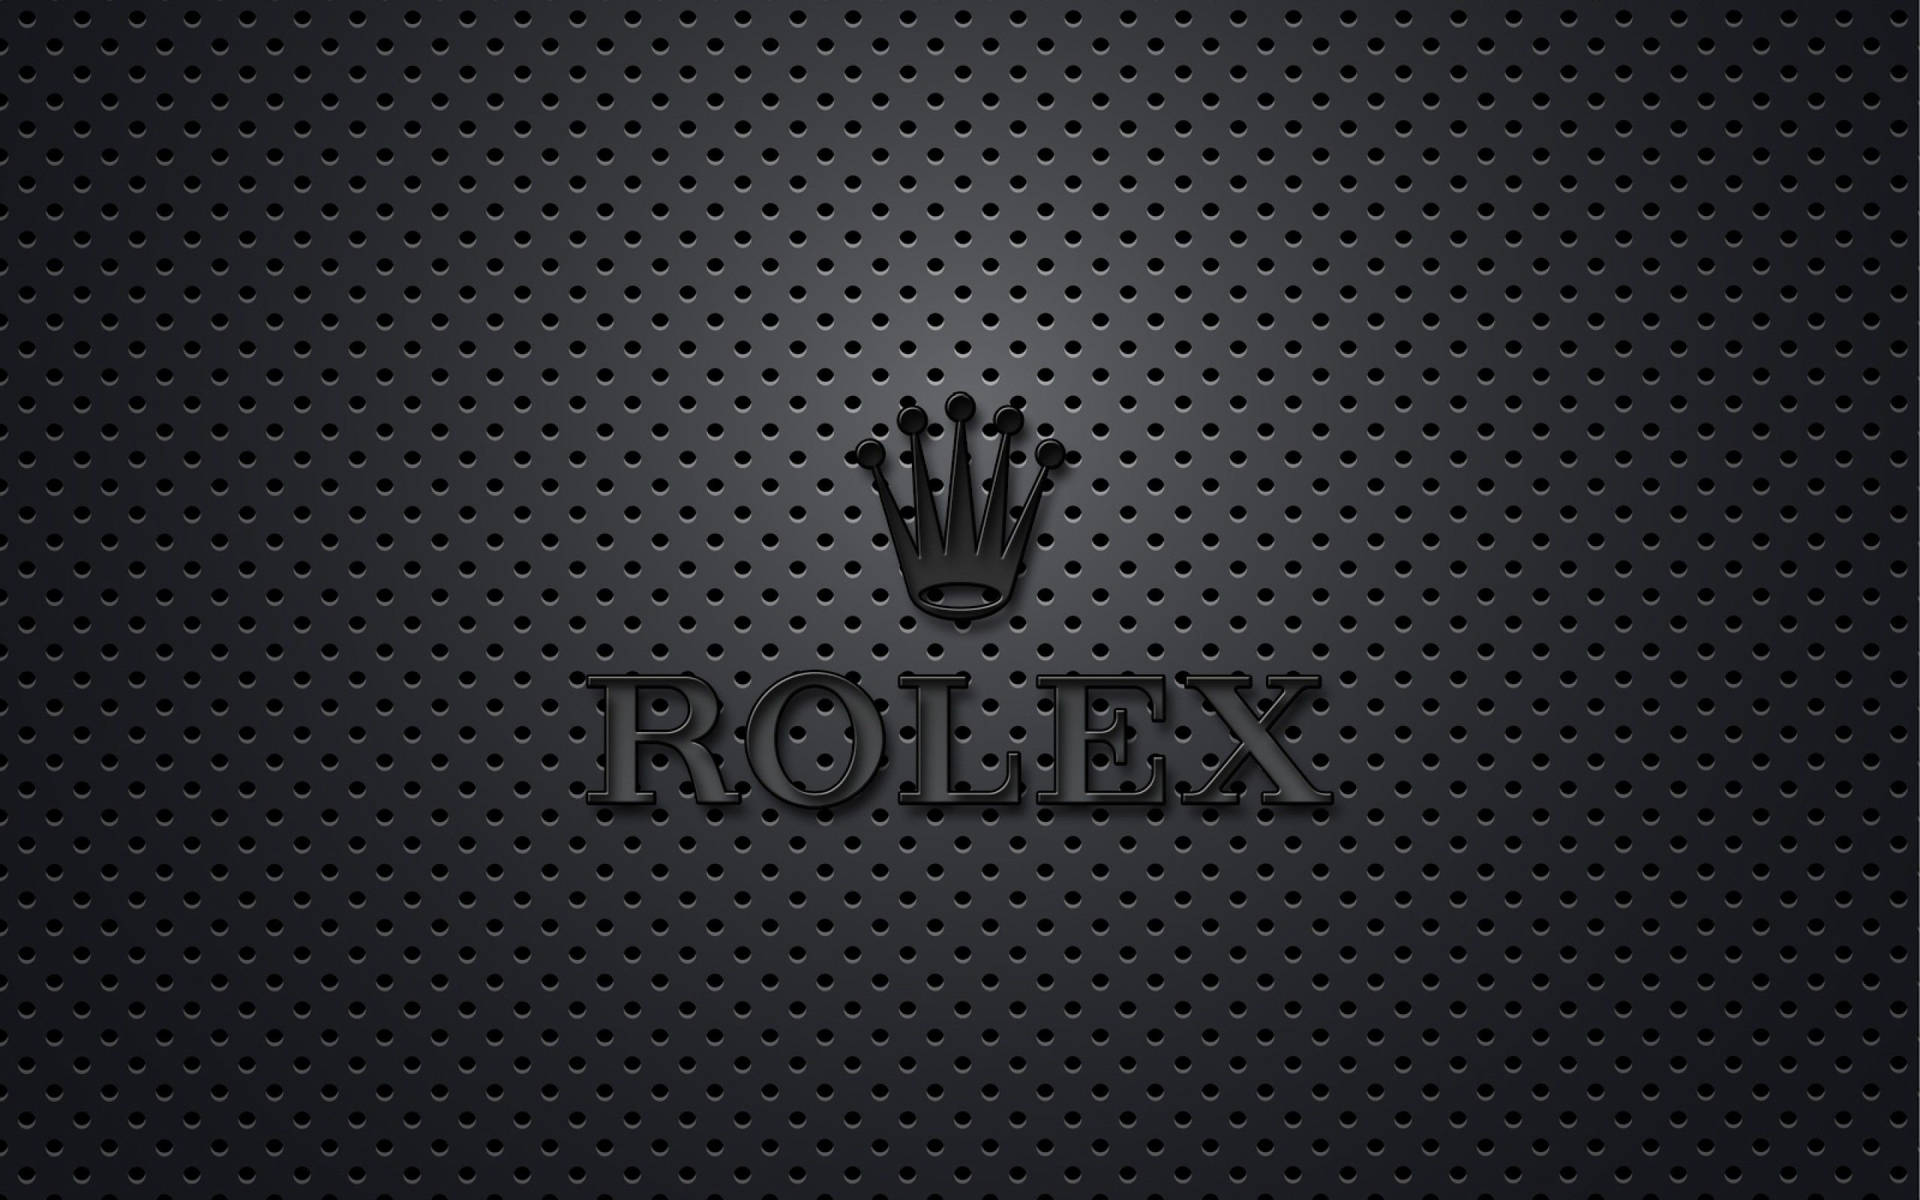 rolex logo black